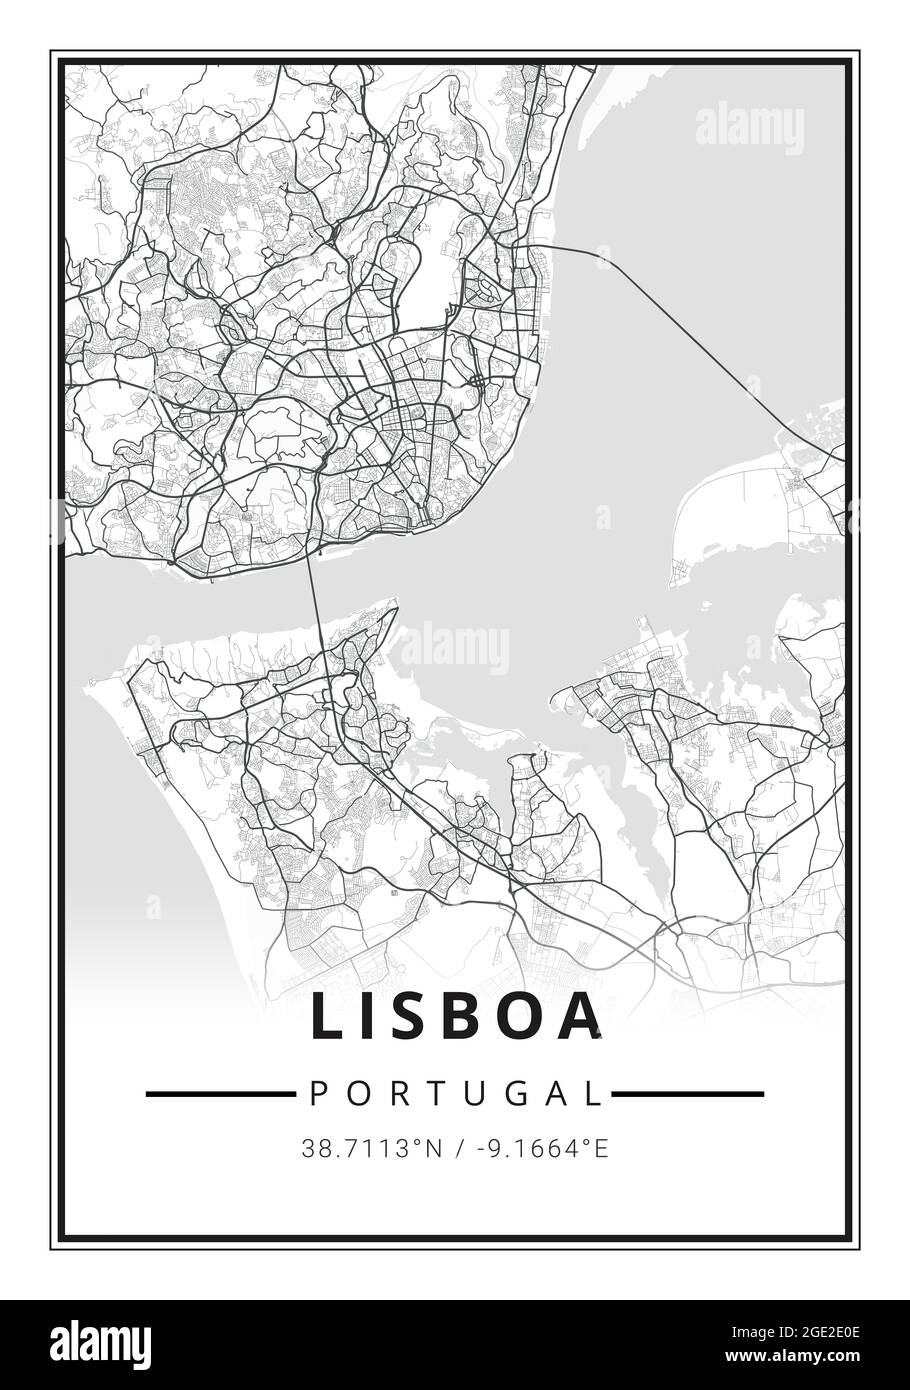 Street map art of Lisbon city in Portugal Stock Photo